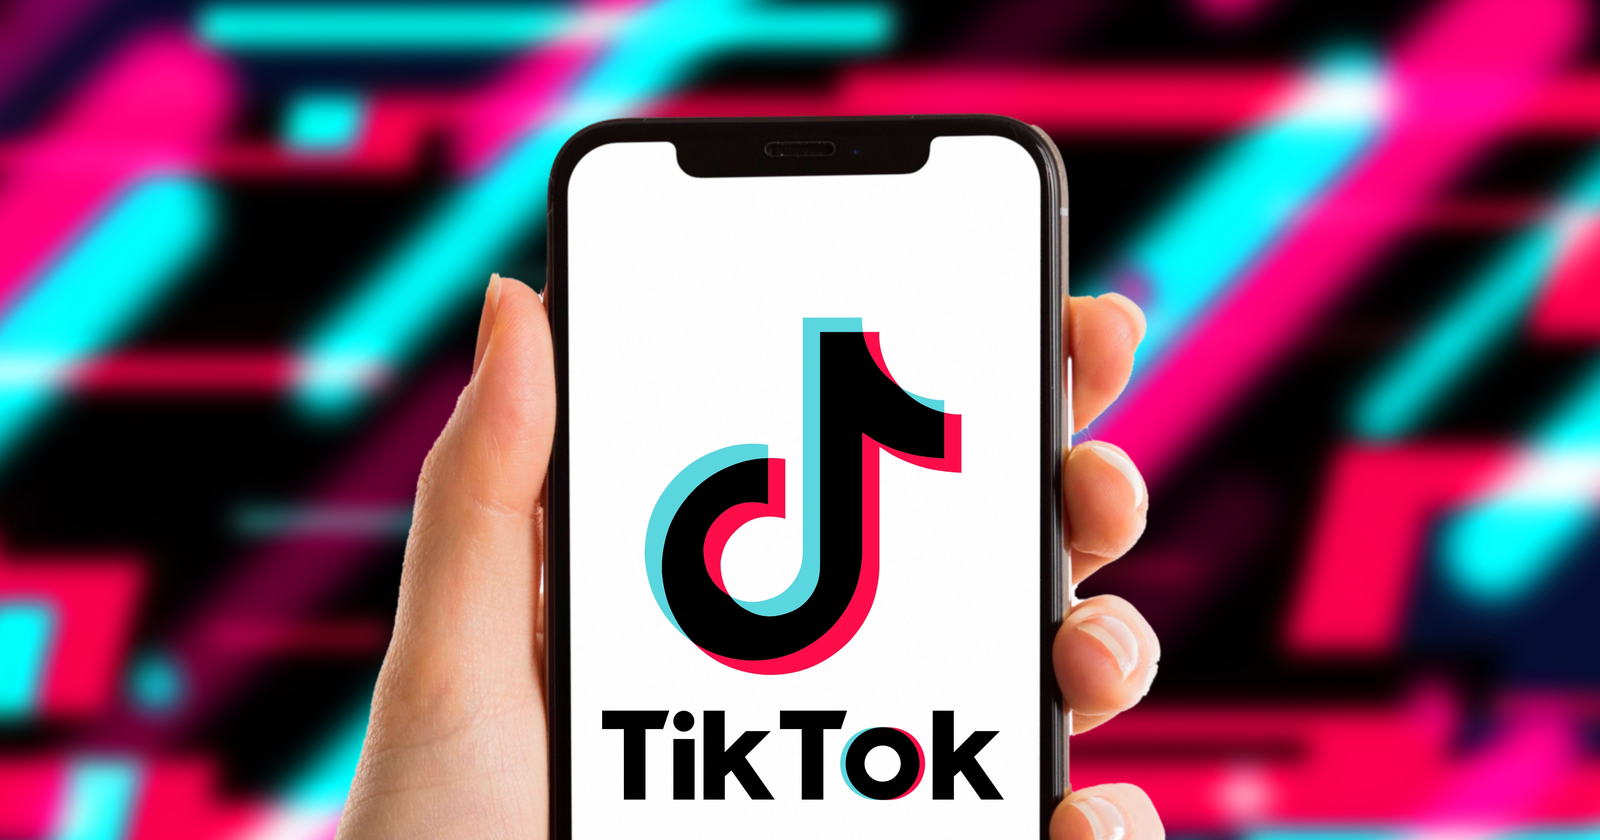 TikTok Application